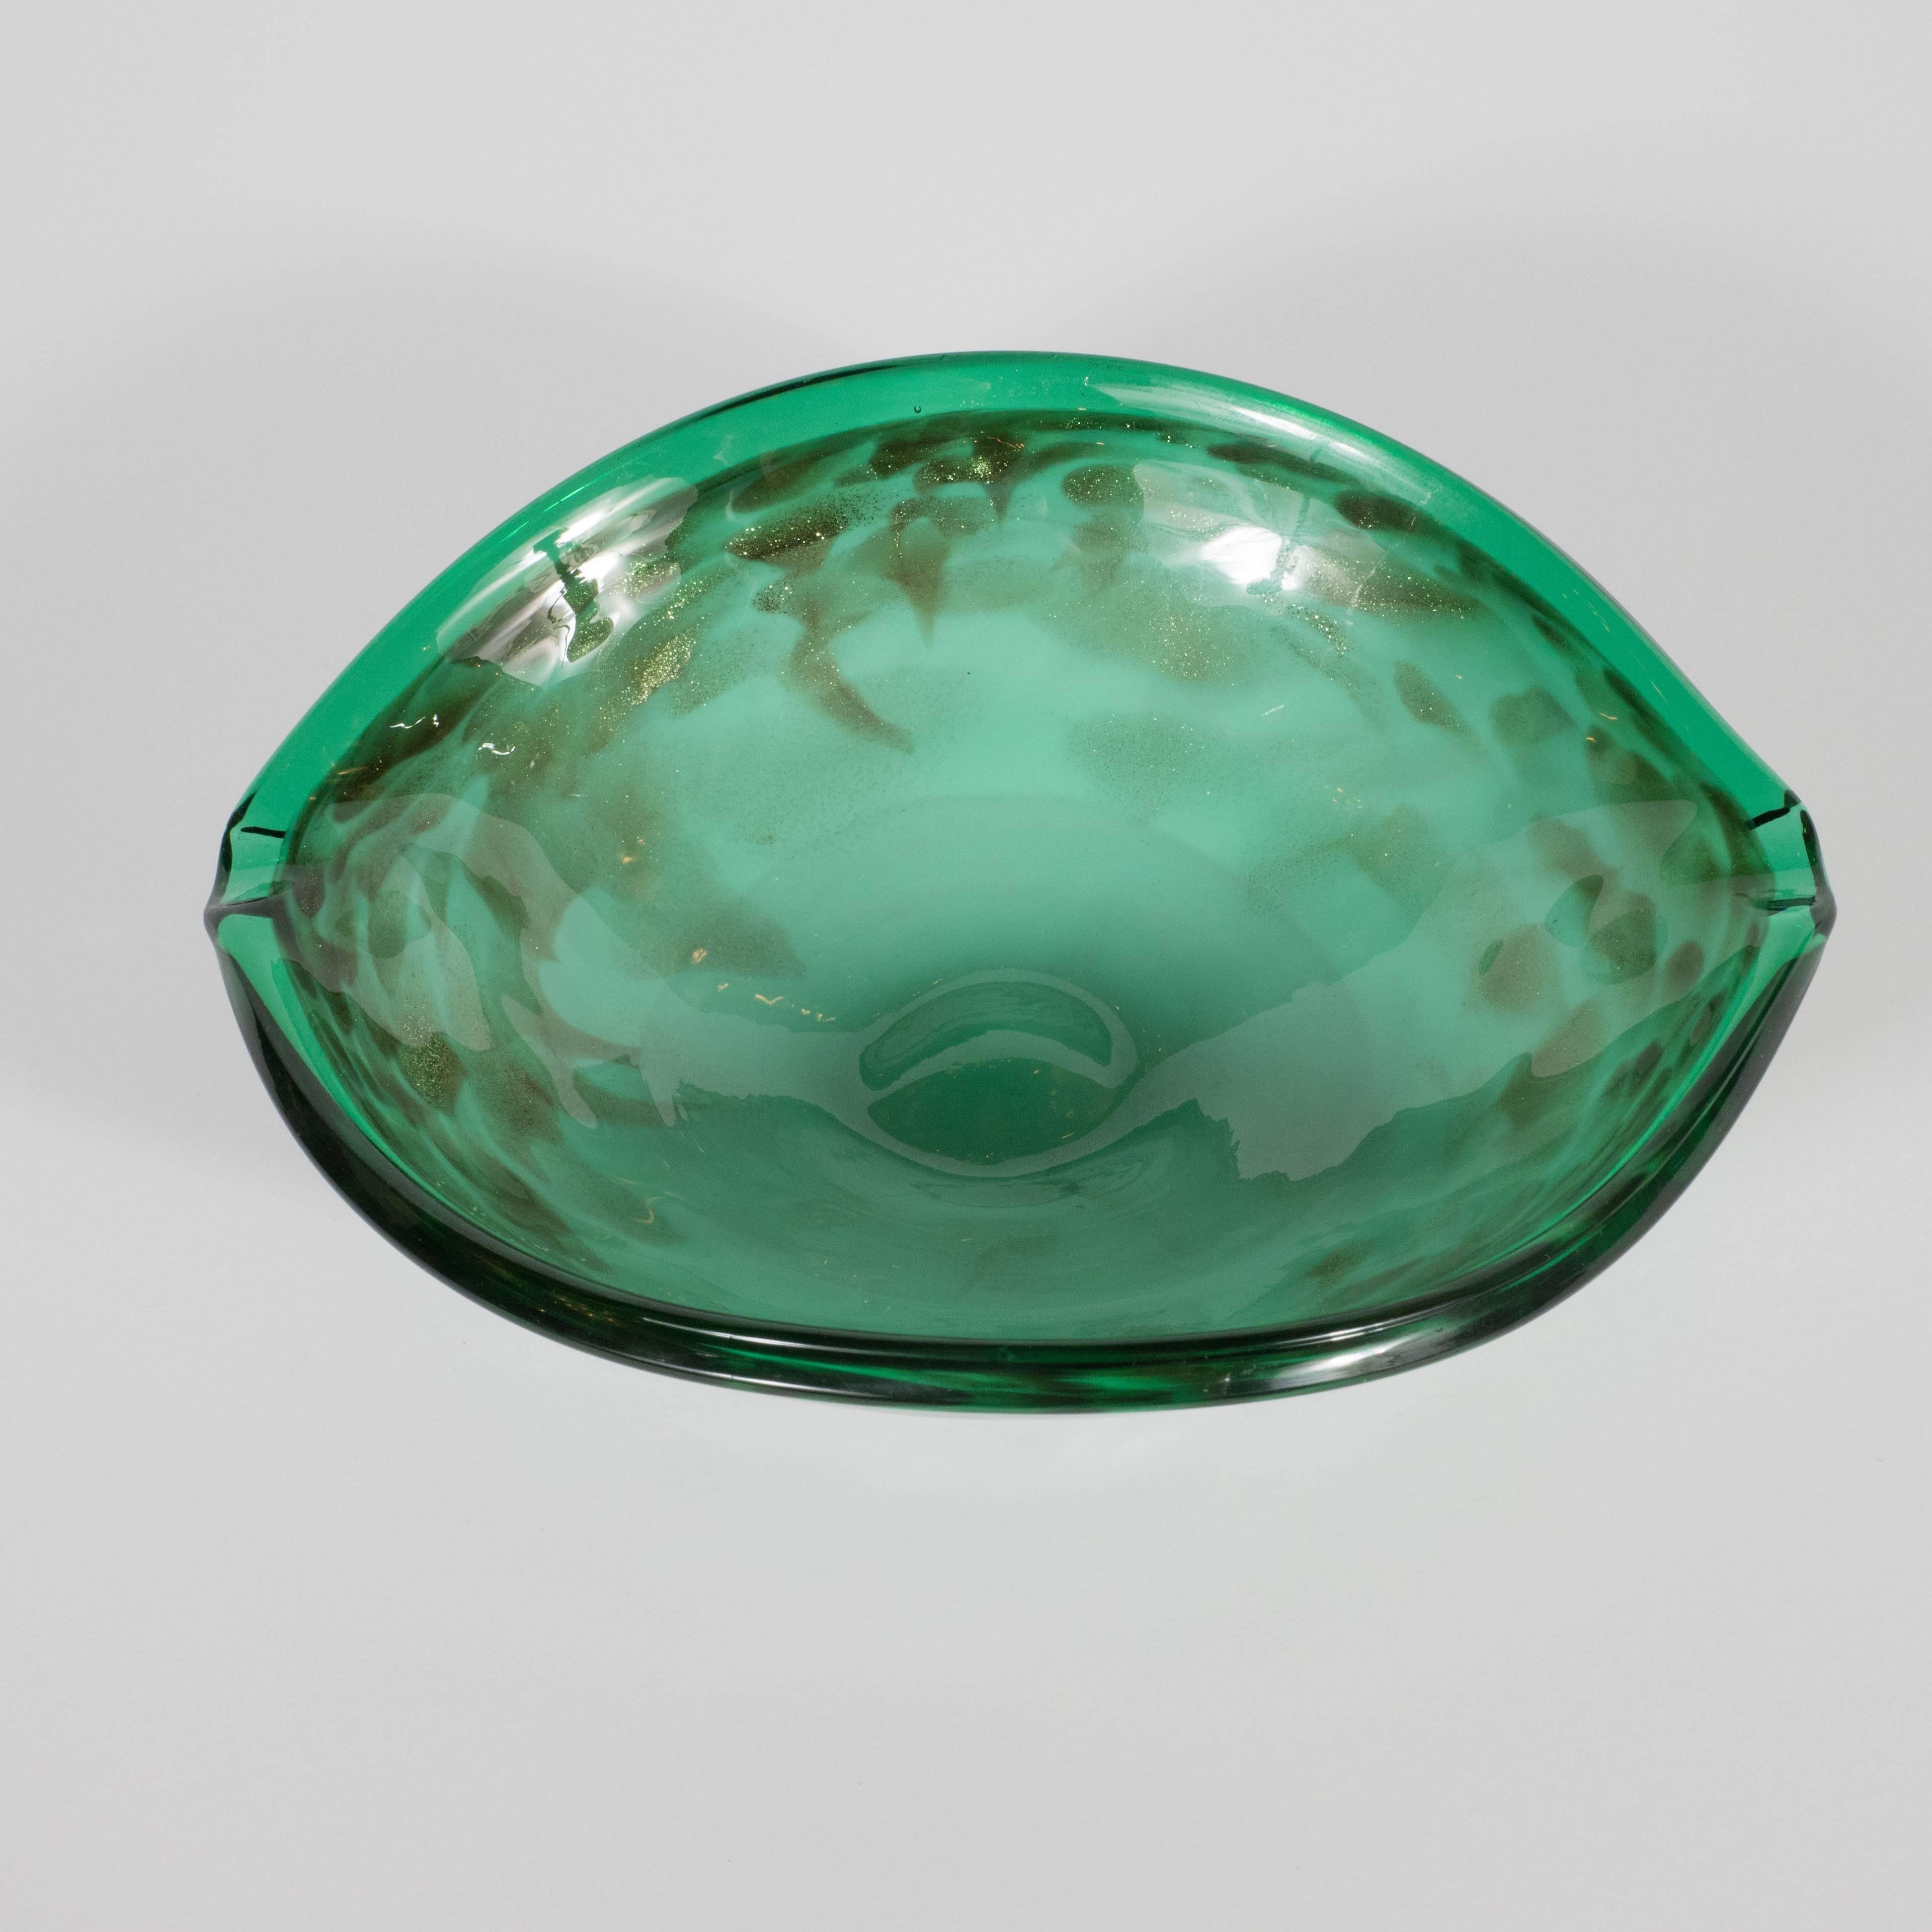 Italian Mid-Century Modern Murano Glass Bowl in Sea Foam and Iridescent Emerald Green